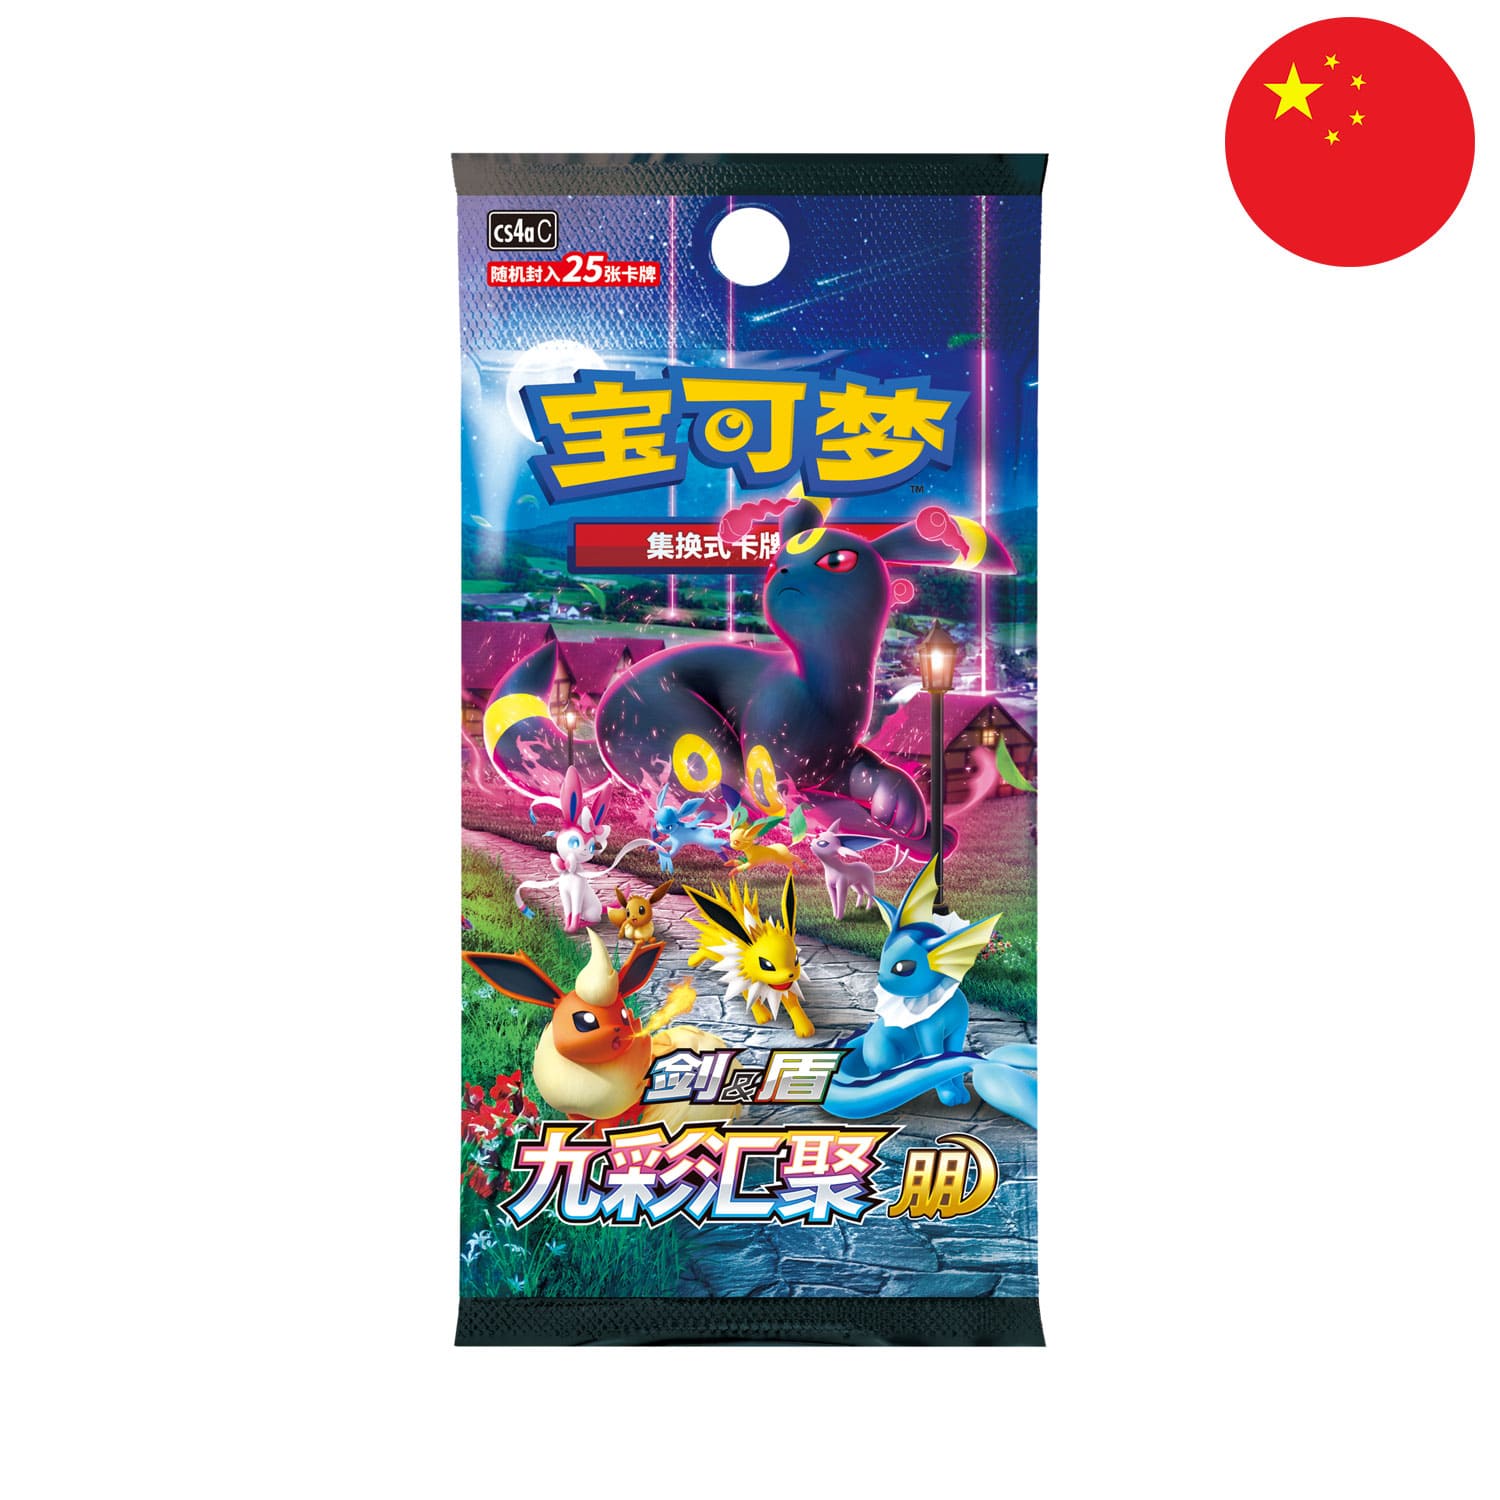 Das Jumbo Pokemon Boosterpack Nine Colors Gathering: Friend (CS4a),als Scan, mit der Flagge Chinas in der Ecke.